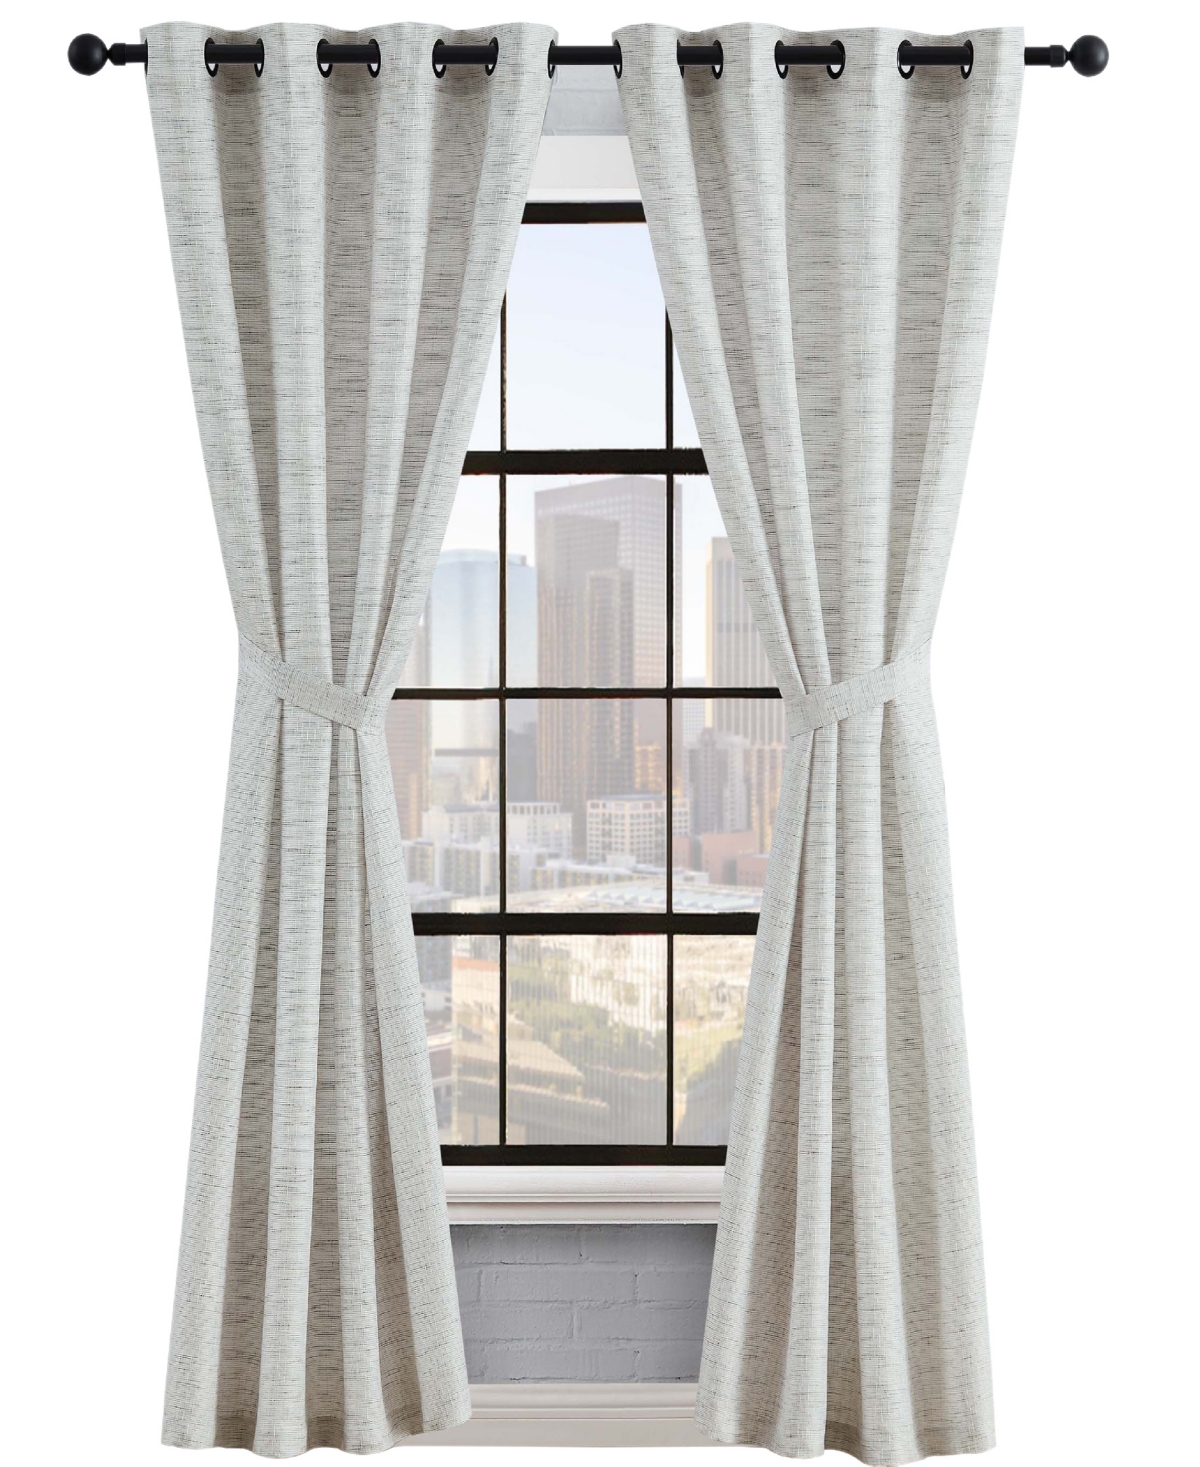 Lucky Brand Sierra Textured Light Filtering Grommet Window Curtain Panel Pair With Tiebacks, 52" X 84" In Gray